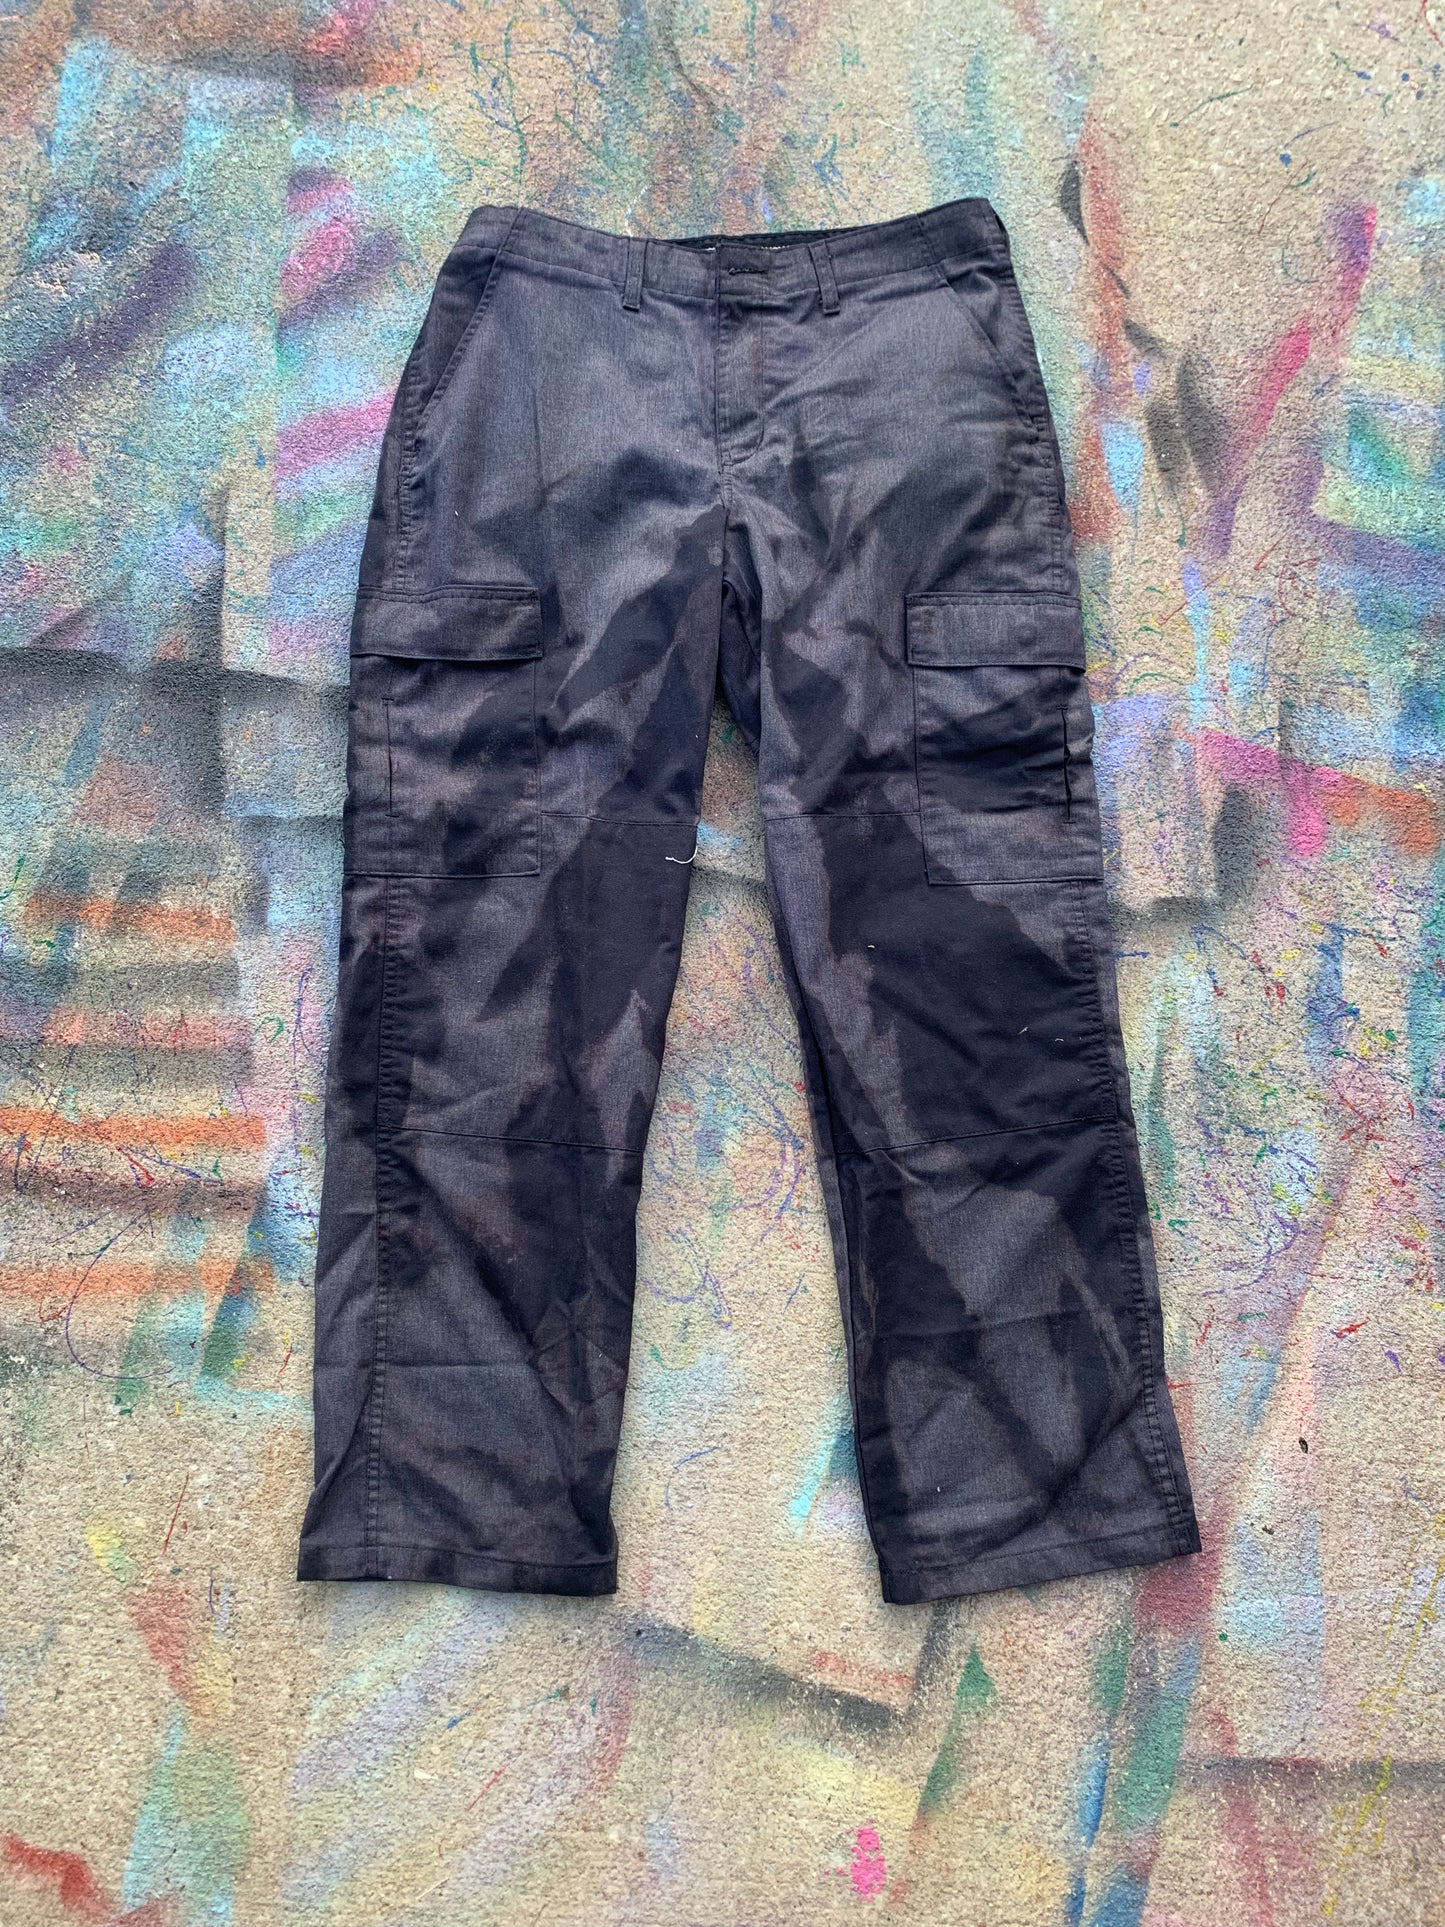 (LS) Underbleached Cargo Pants #2 (Grey/Navy)- 32/32